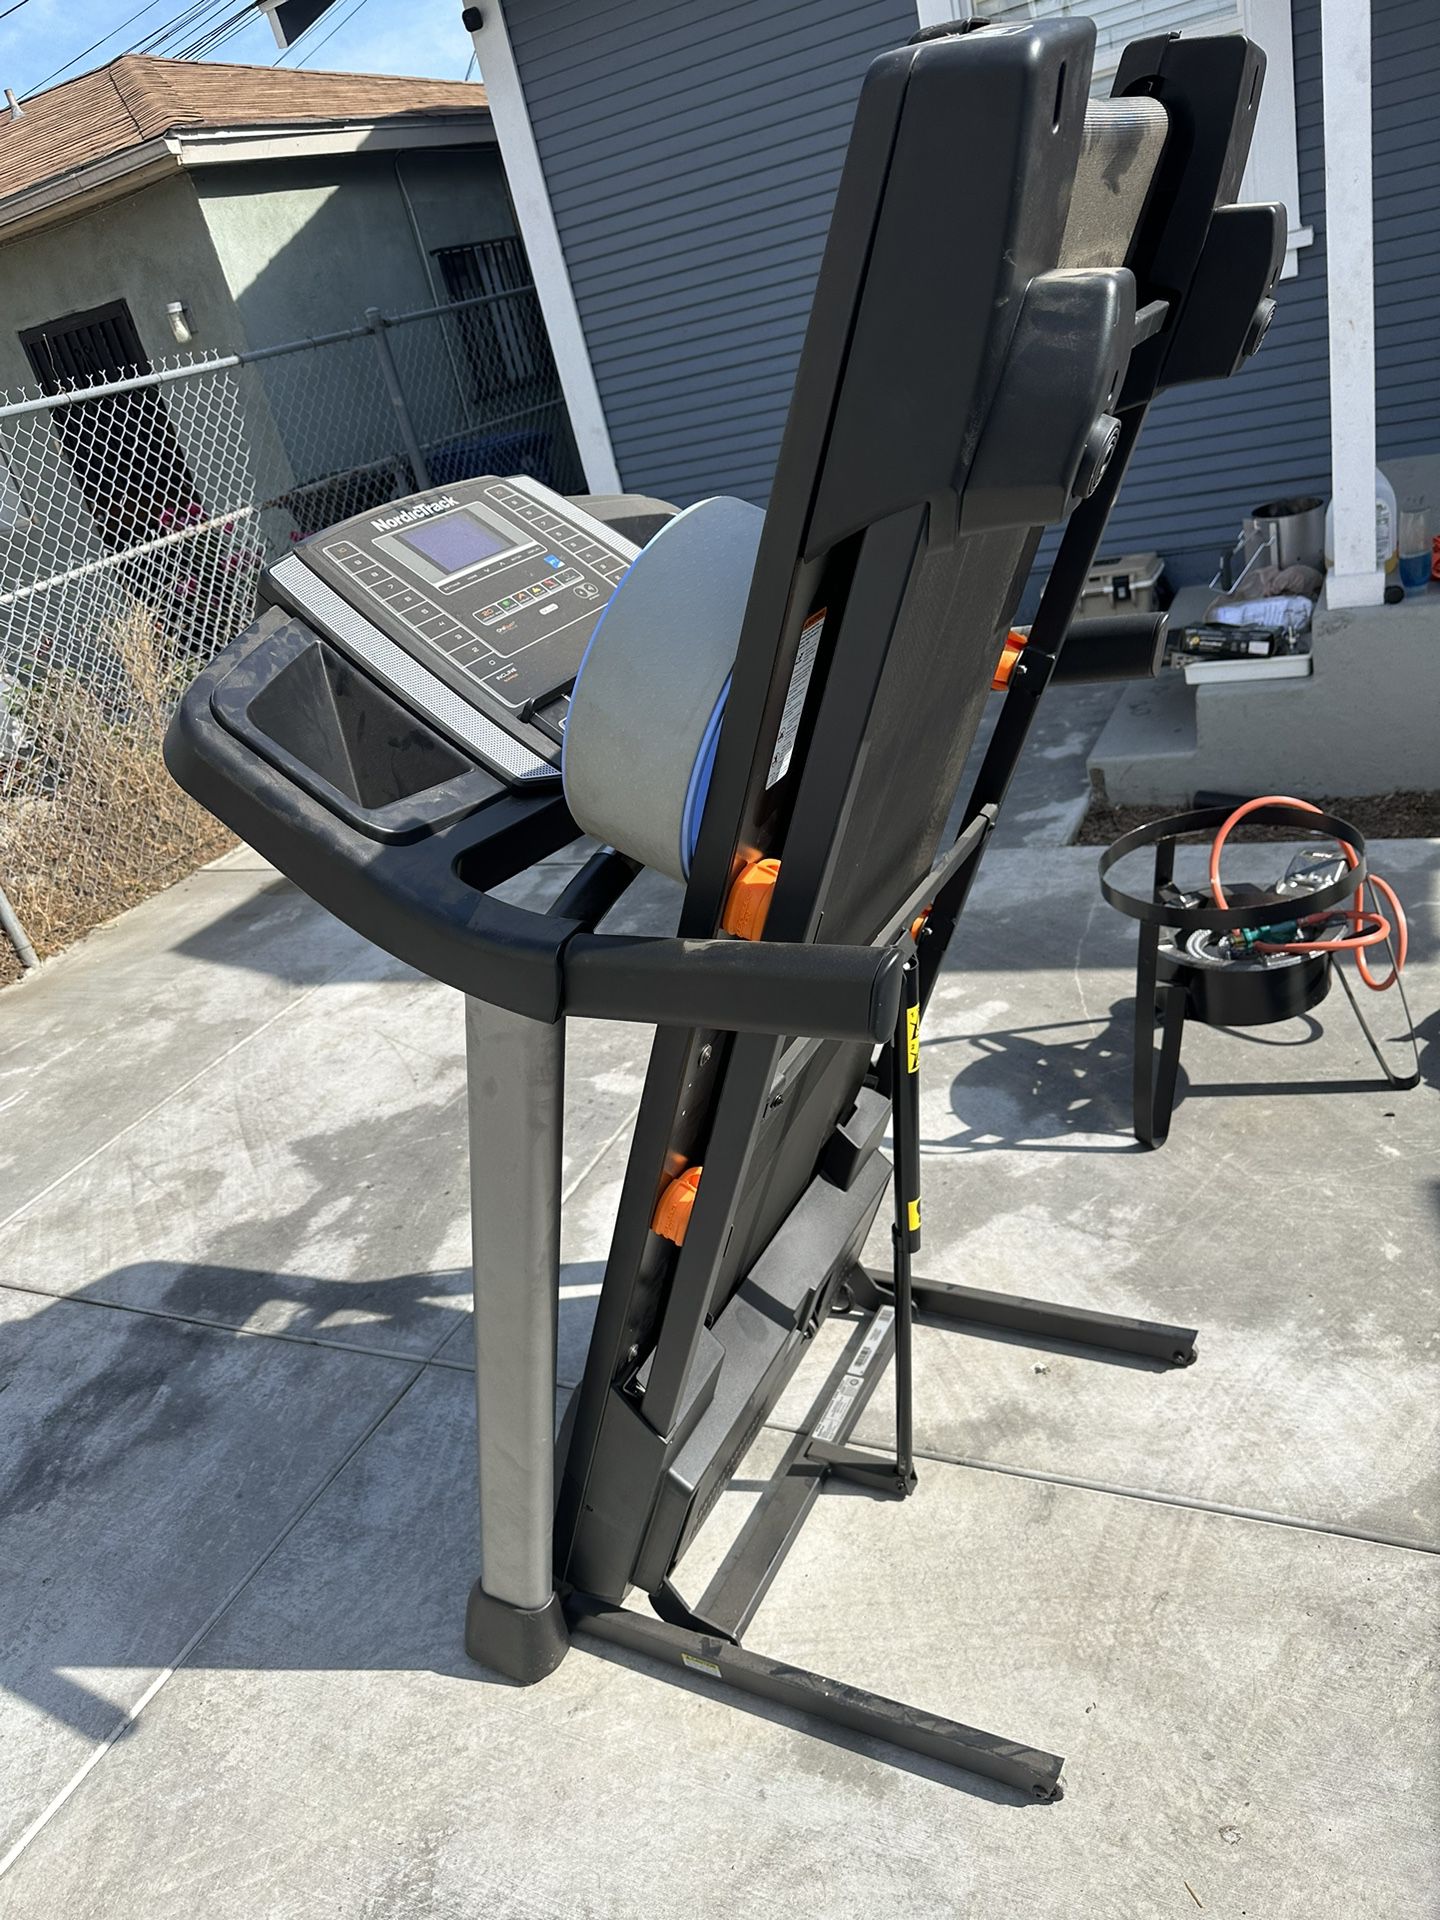 Nordictrack Treadmill 